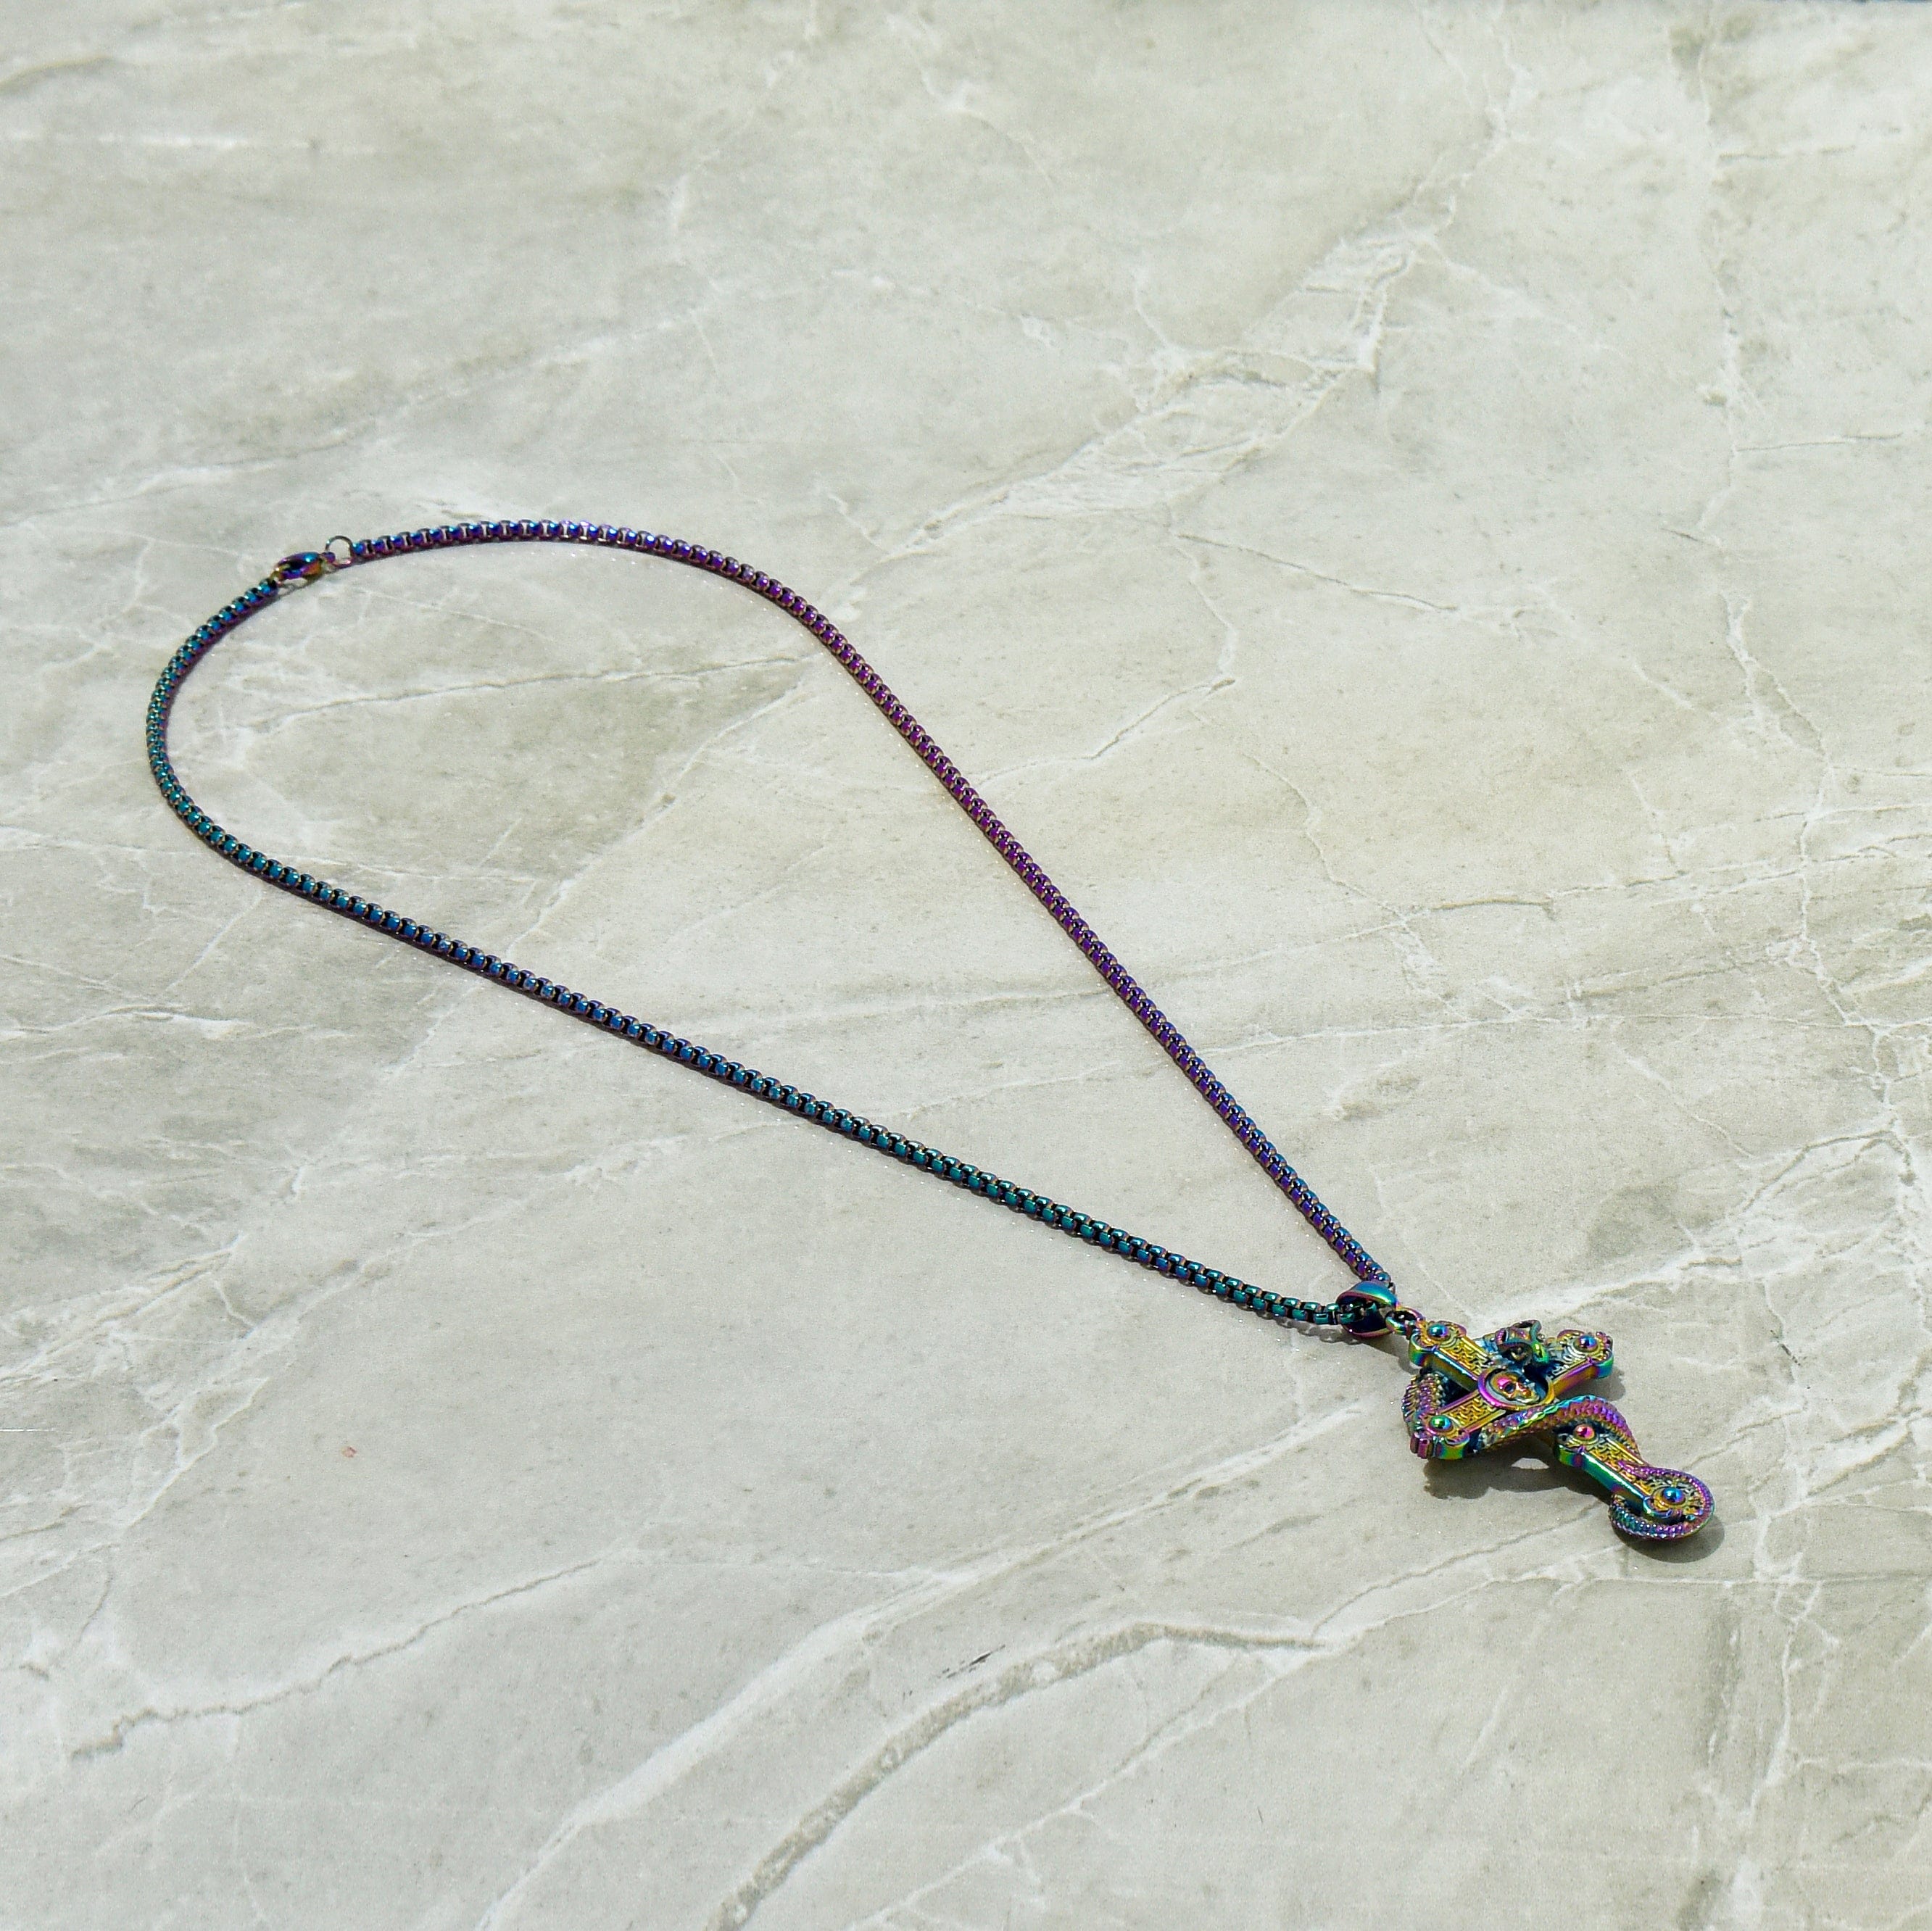 Kalifano Steel Hearts Jewelry Aurora Borealis Dragon Cross Steel Hearts Necklace SHN515-AB